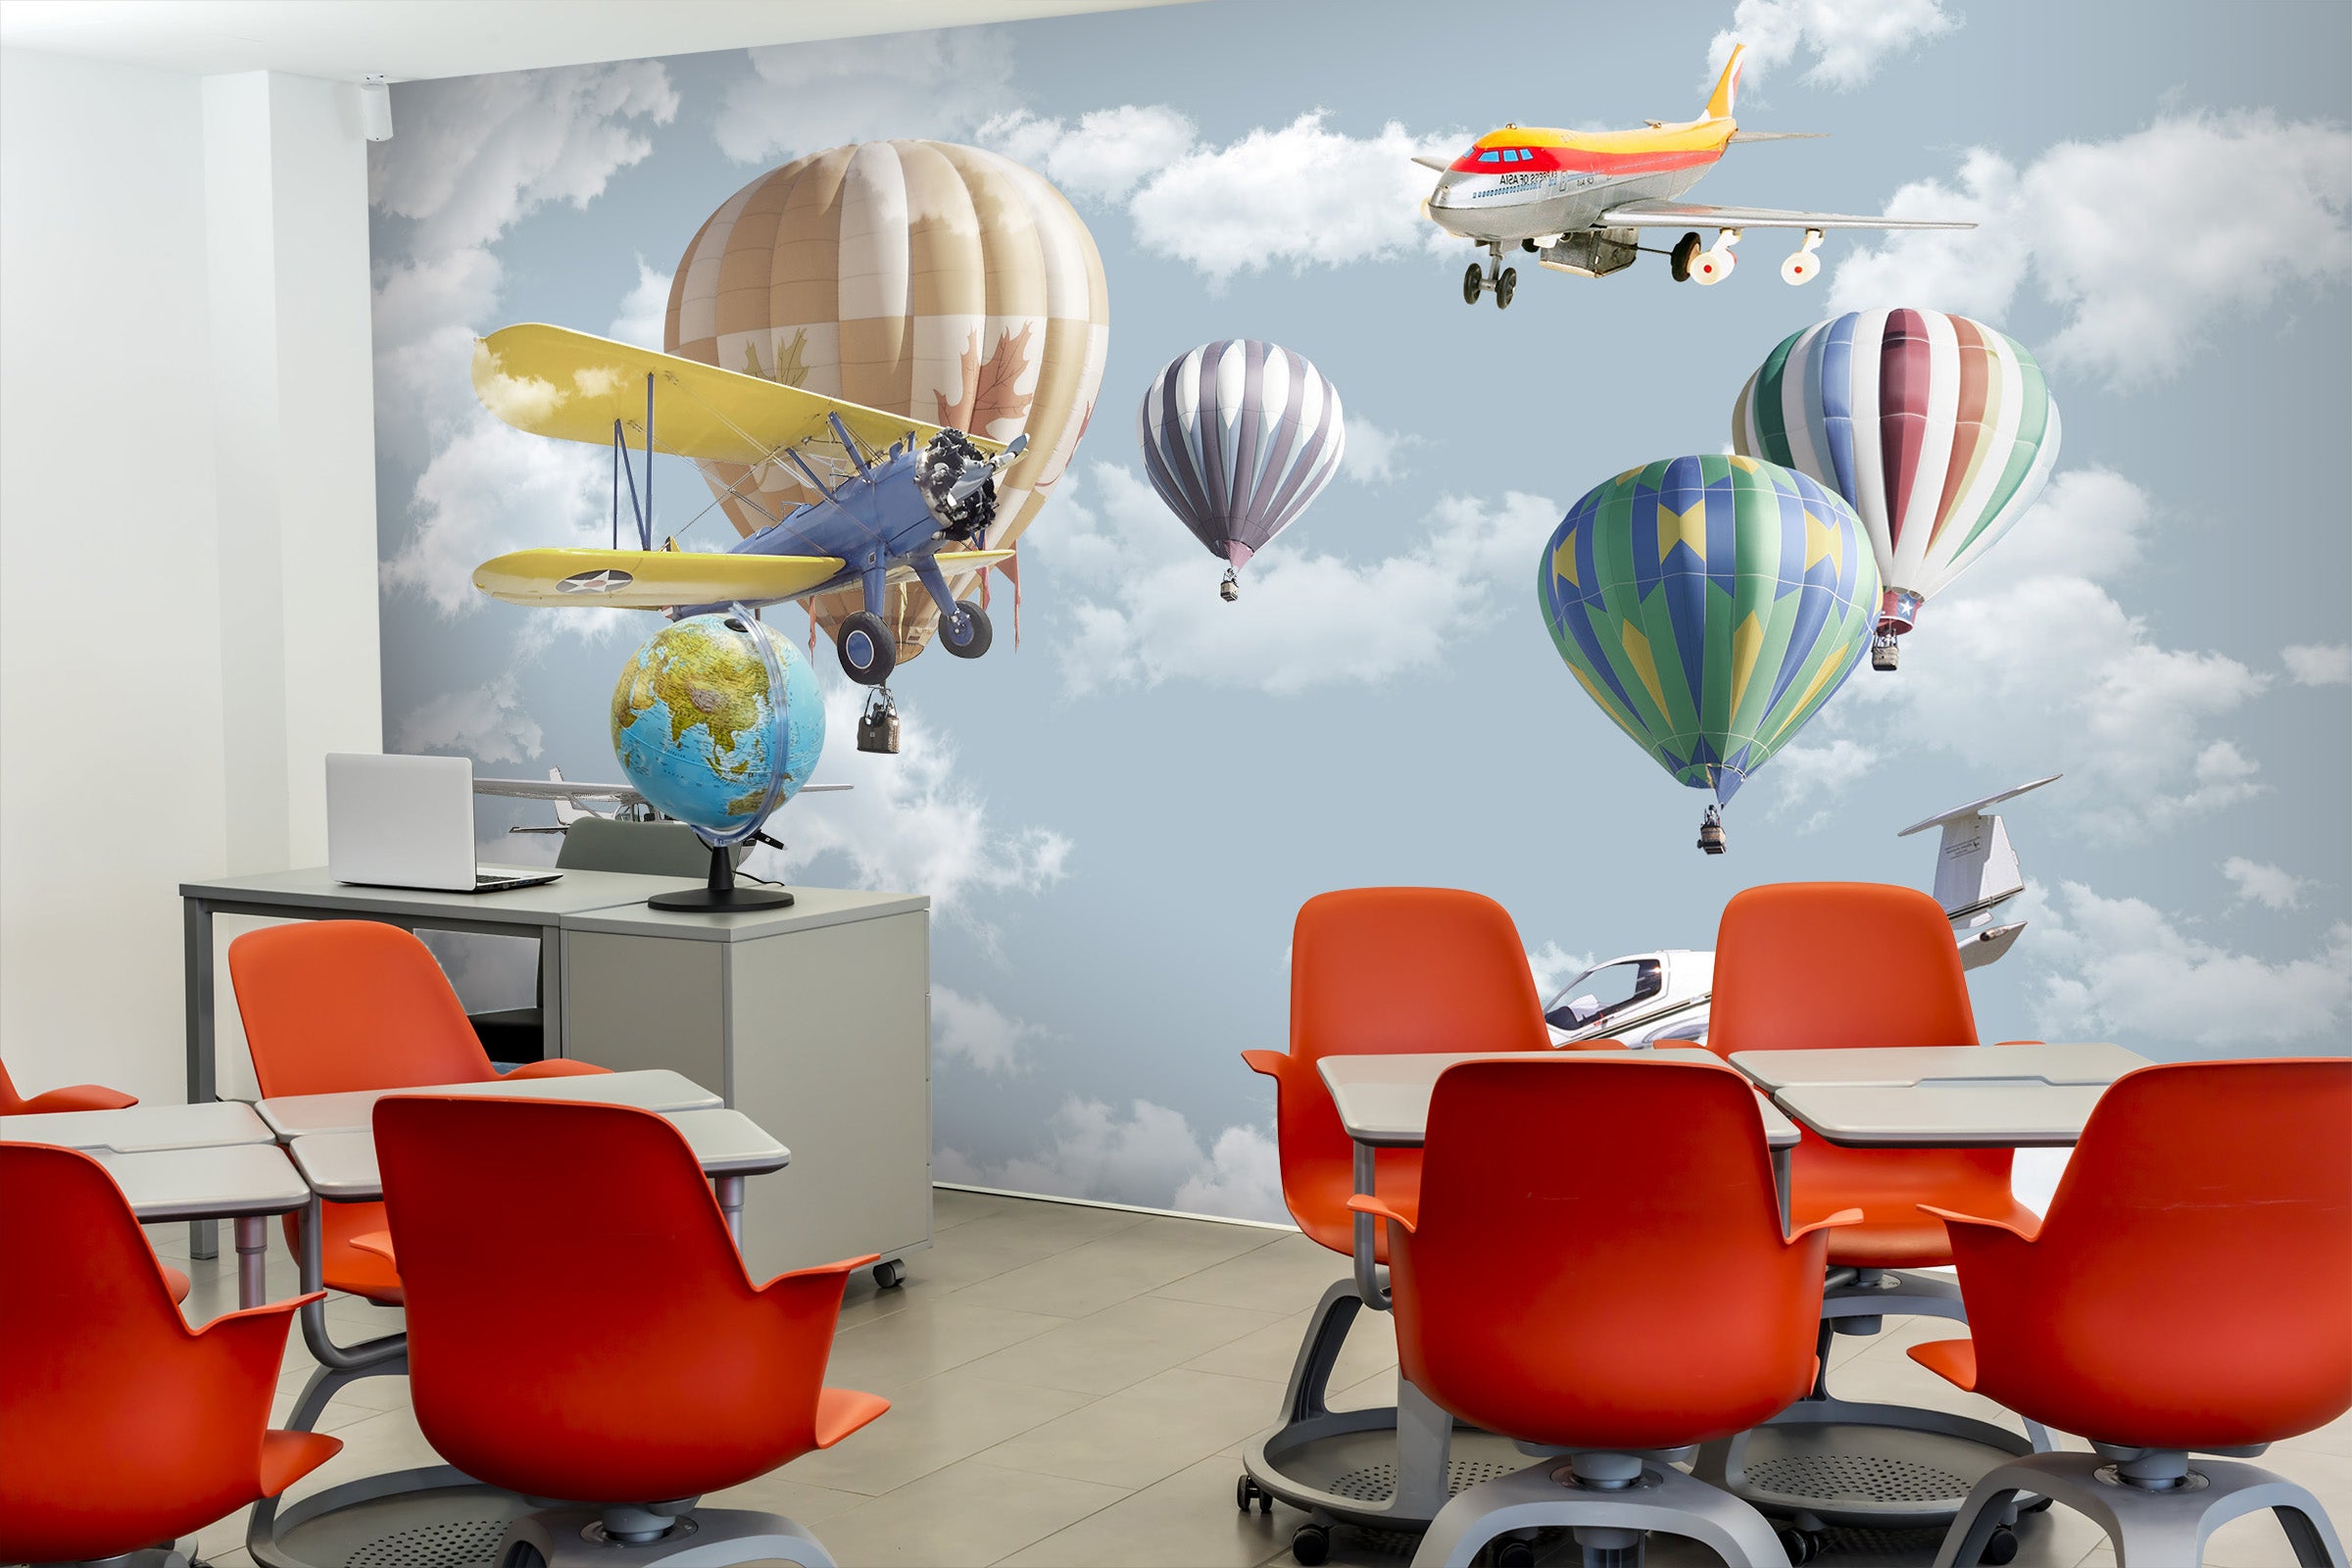 3D Hot Air Balloon with planes 46 Wall Murals Wallpaper AJ Wallpaper 2 